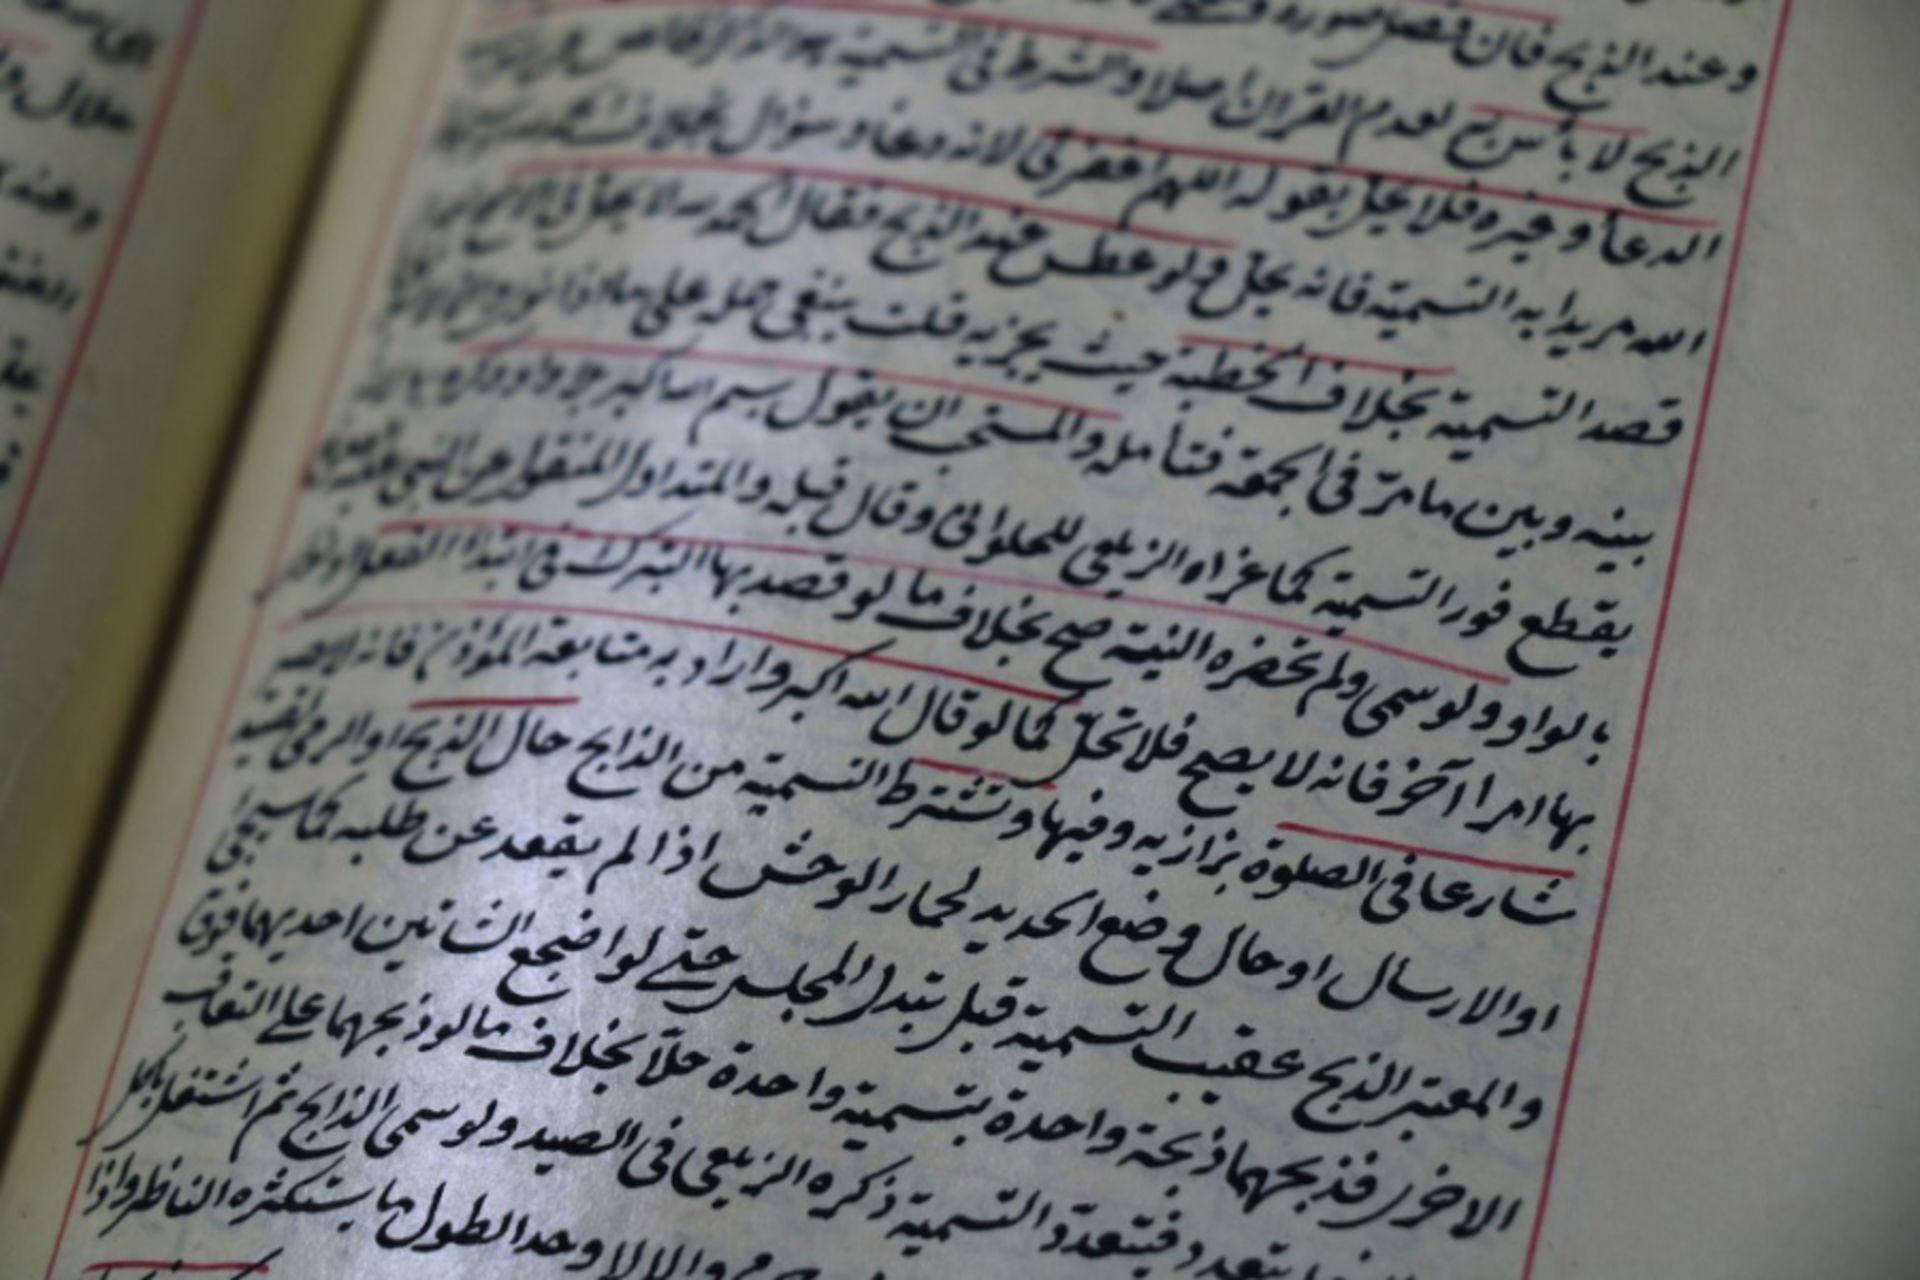 Dur Al-Mukhtar Sharah Tanweer Al-Absar by sheikh Muhammad Ala al-Din al-Haskafi - Image 4 of 13